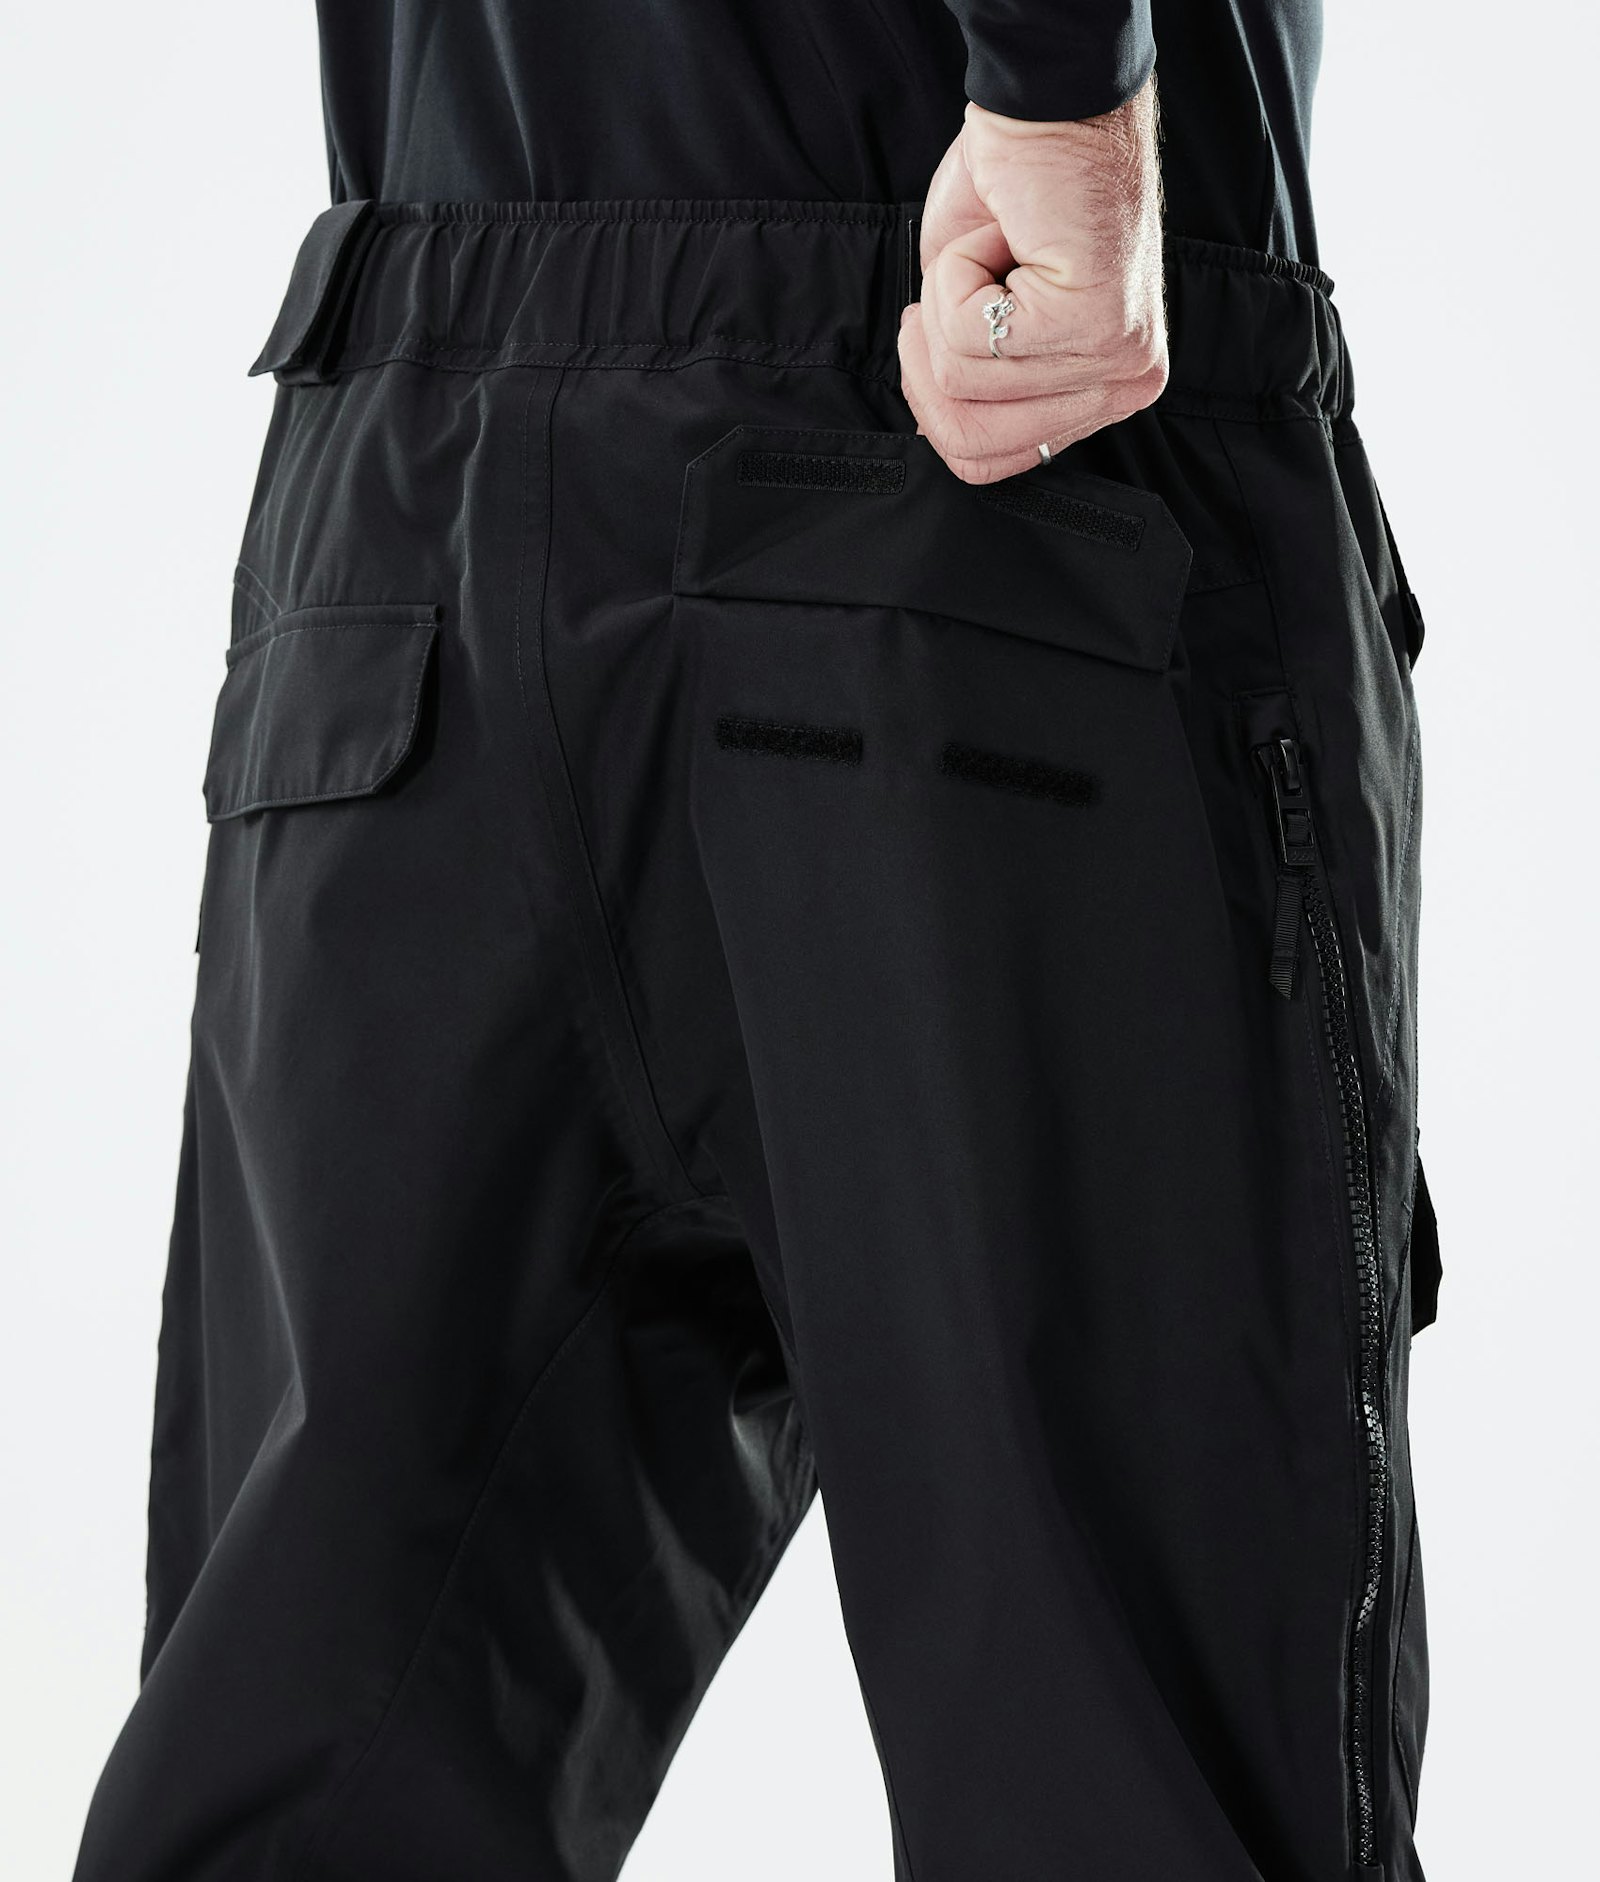 Antek 2021 Ski Pants Men Black, Image 6 of 6